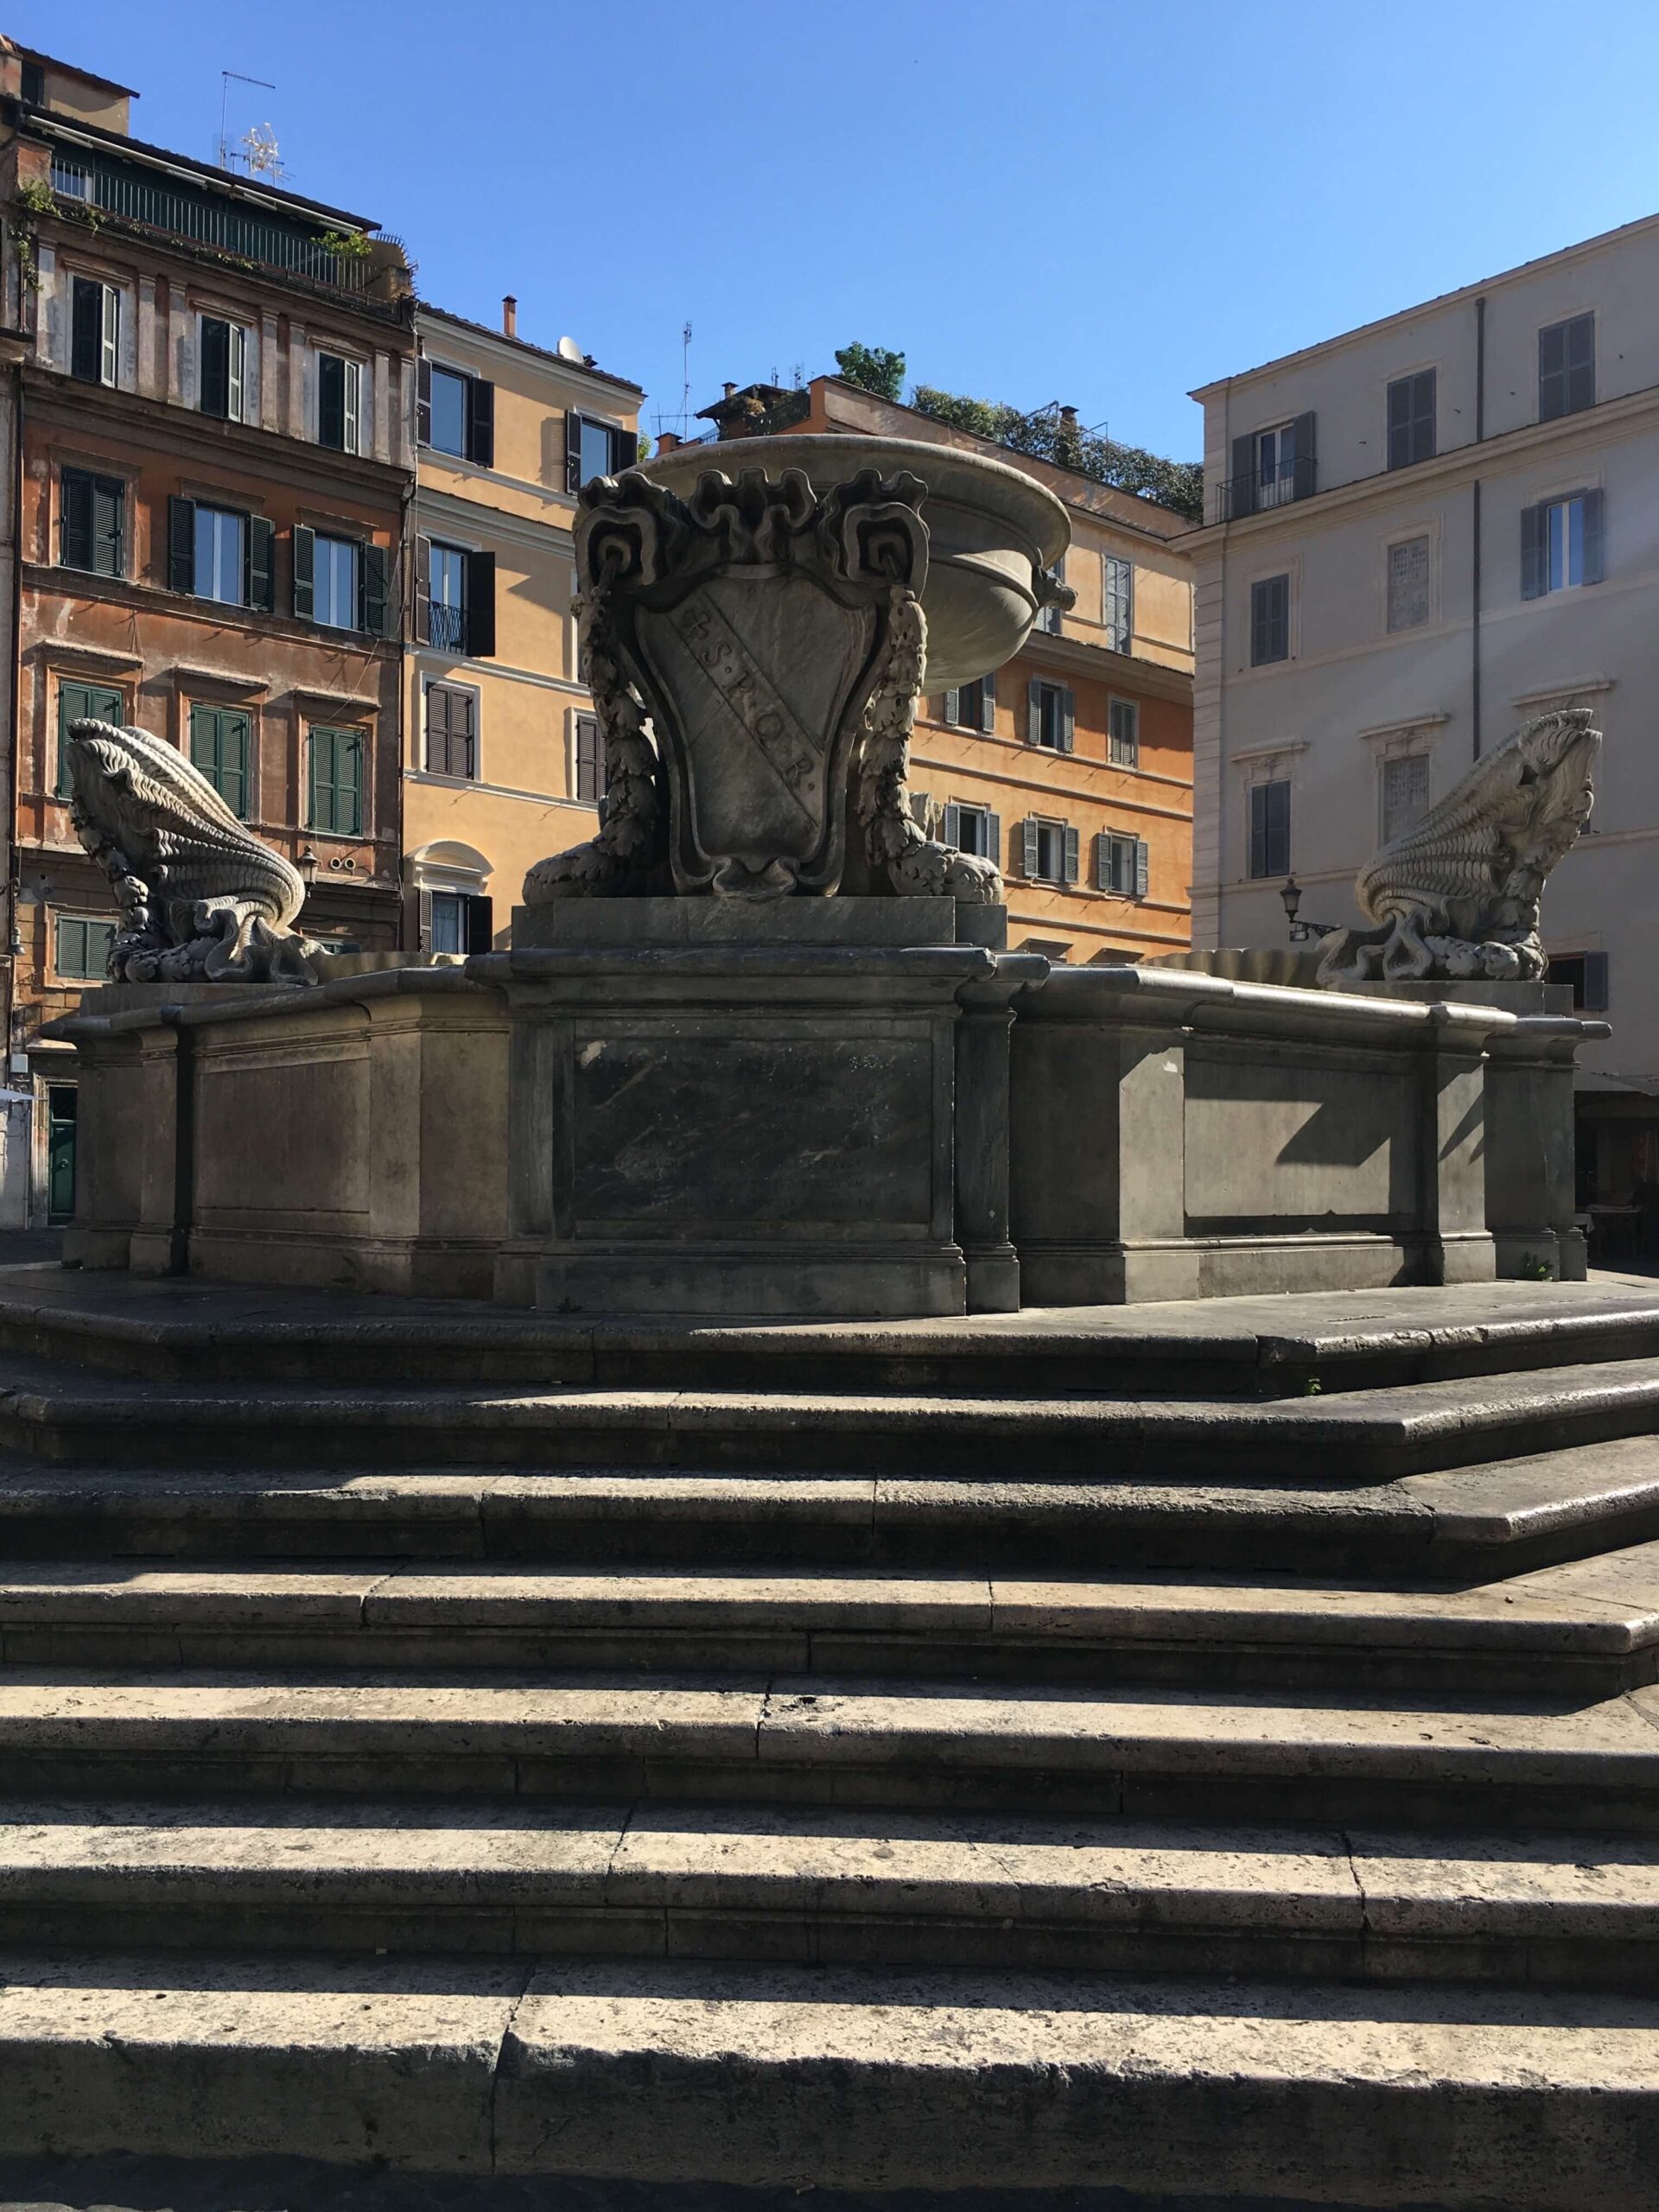 The Fountain, Piazza di Santa Maria. Trastevere, Rome